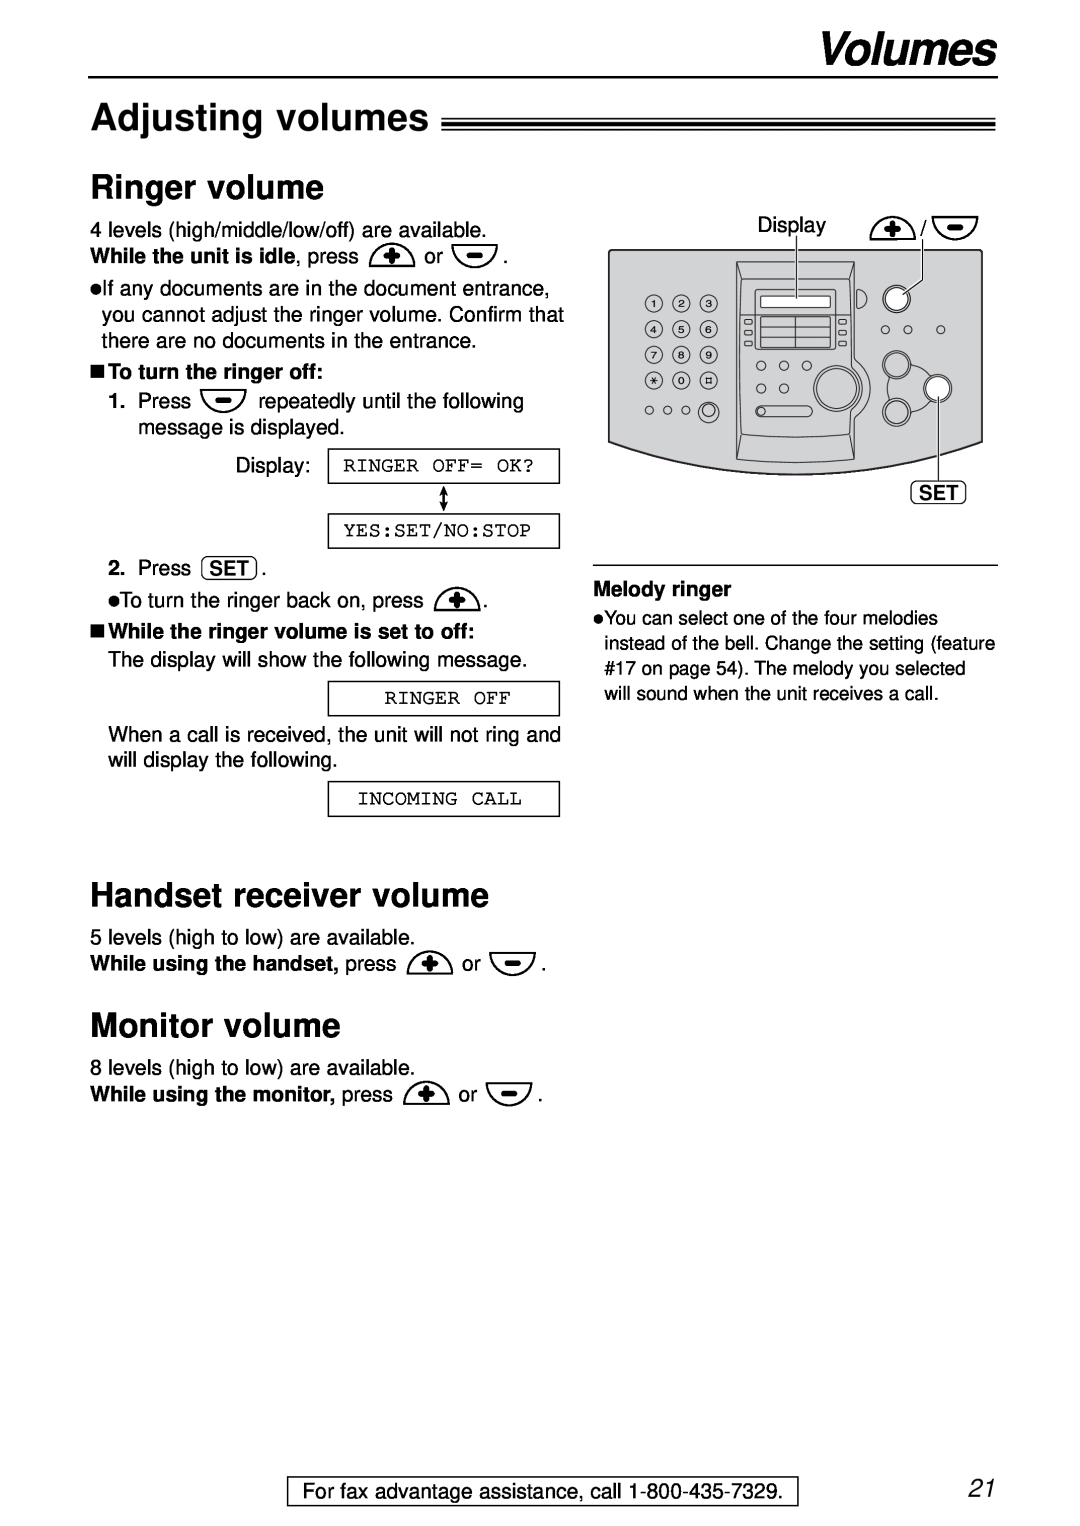 Panasonic KX-FL501 manual Volumes, Adjusting volumes, Ringer volume, Handset receiver volume, Monitor volume, Melody ringer 